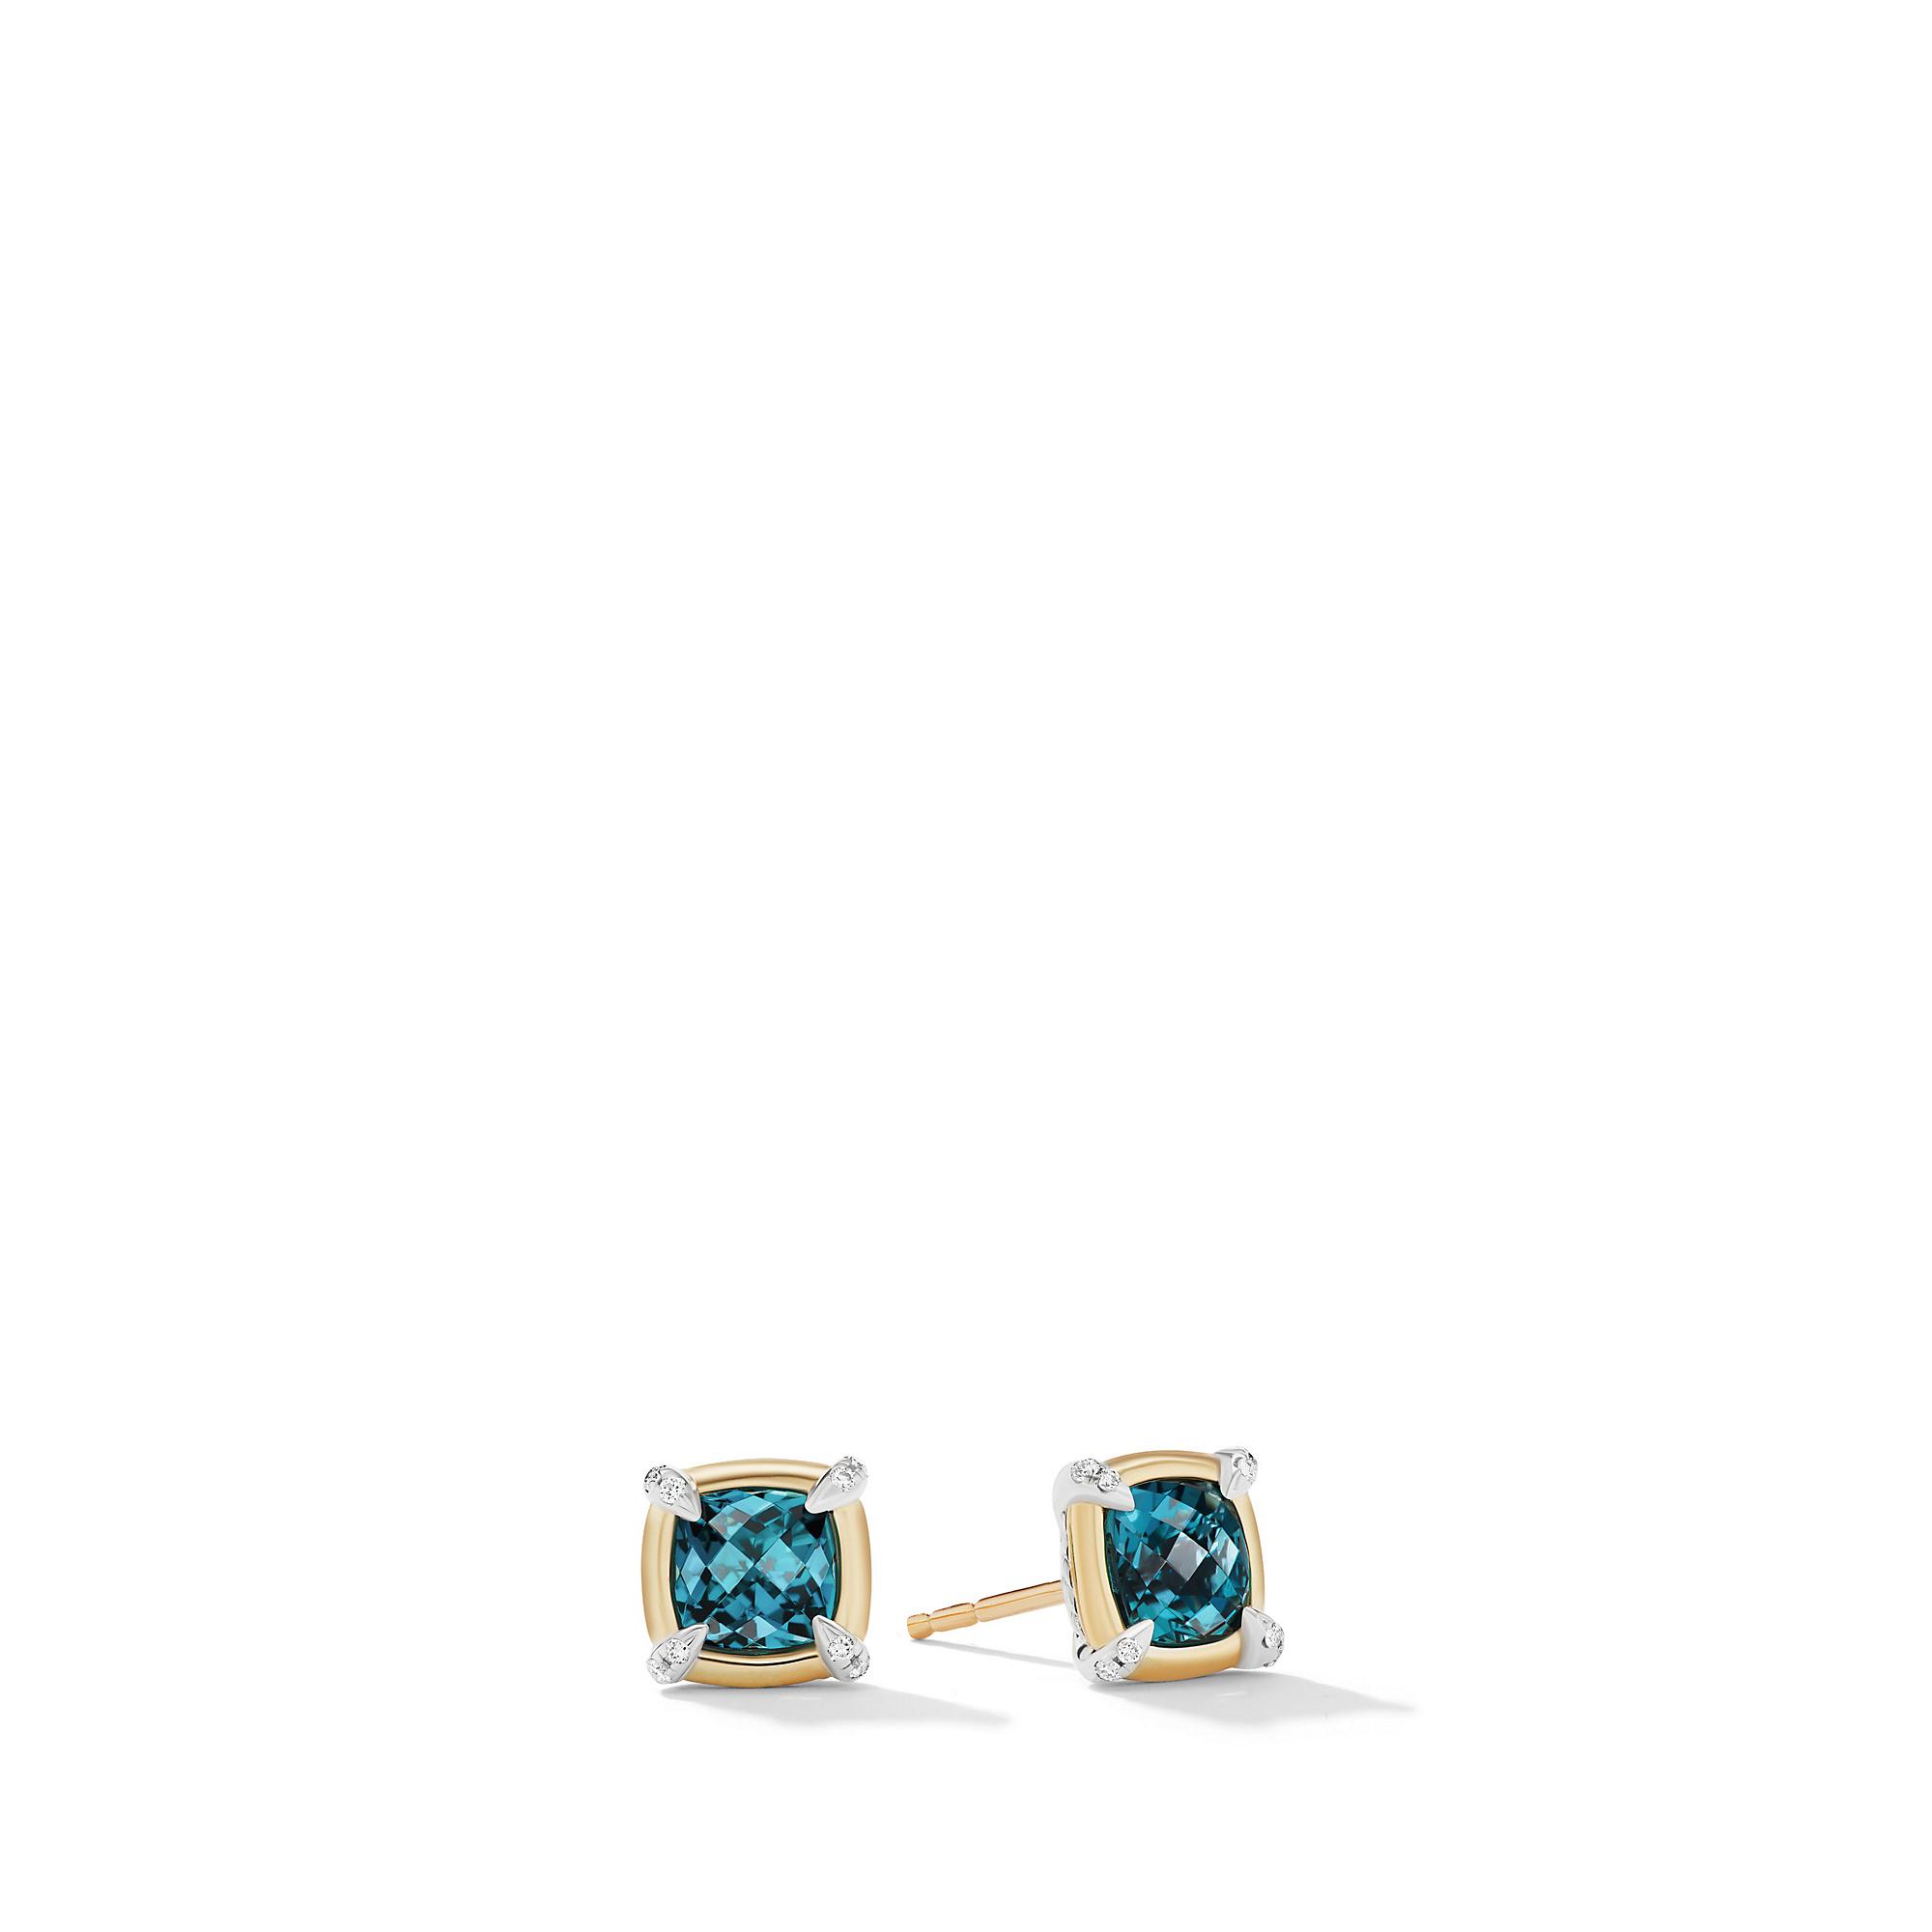 David Yurman Petite Chatelaine Stud Earrings with Hampton Blue Topaz in 18k Yellow Gold Bezel with Diamonds